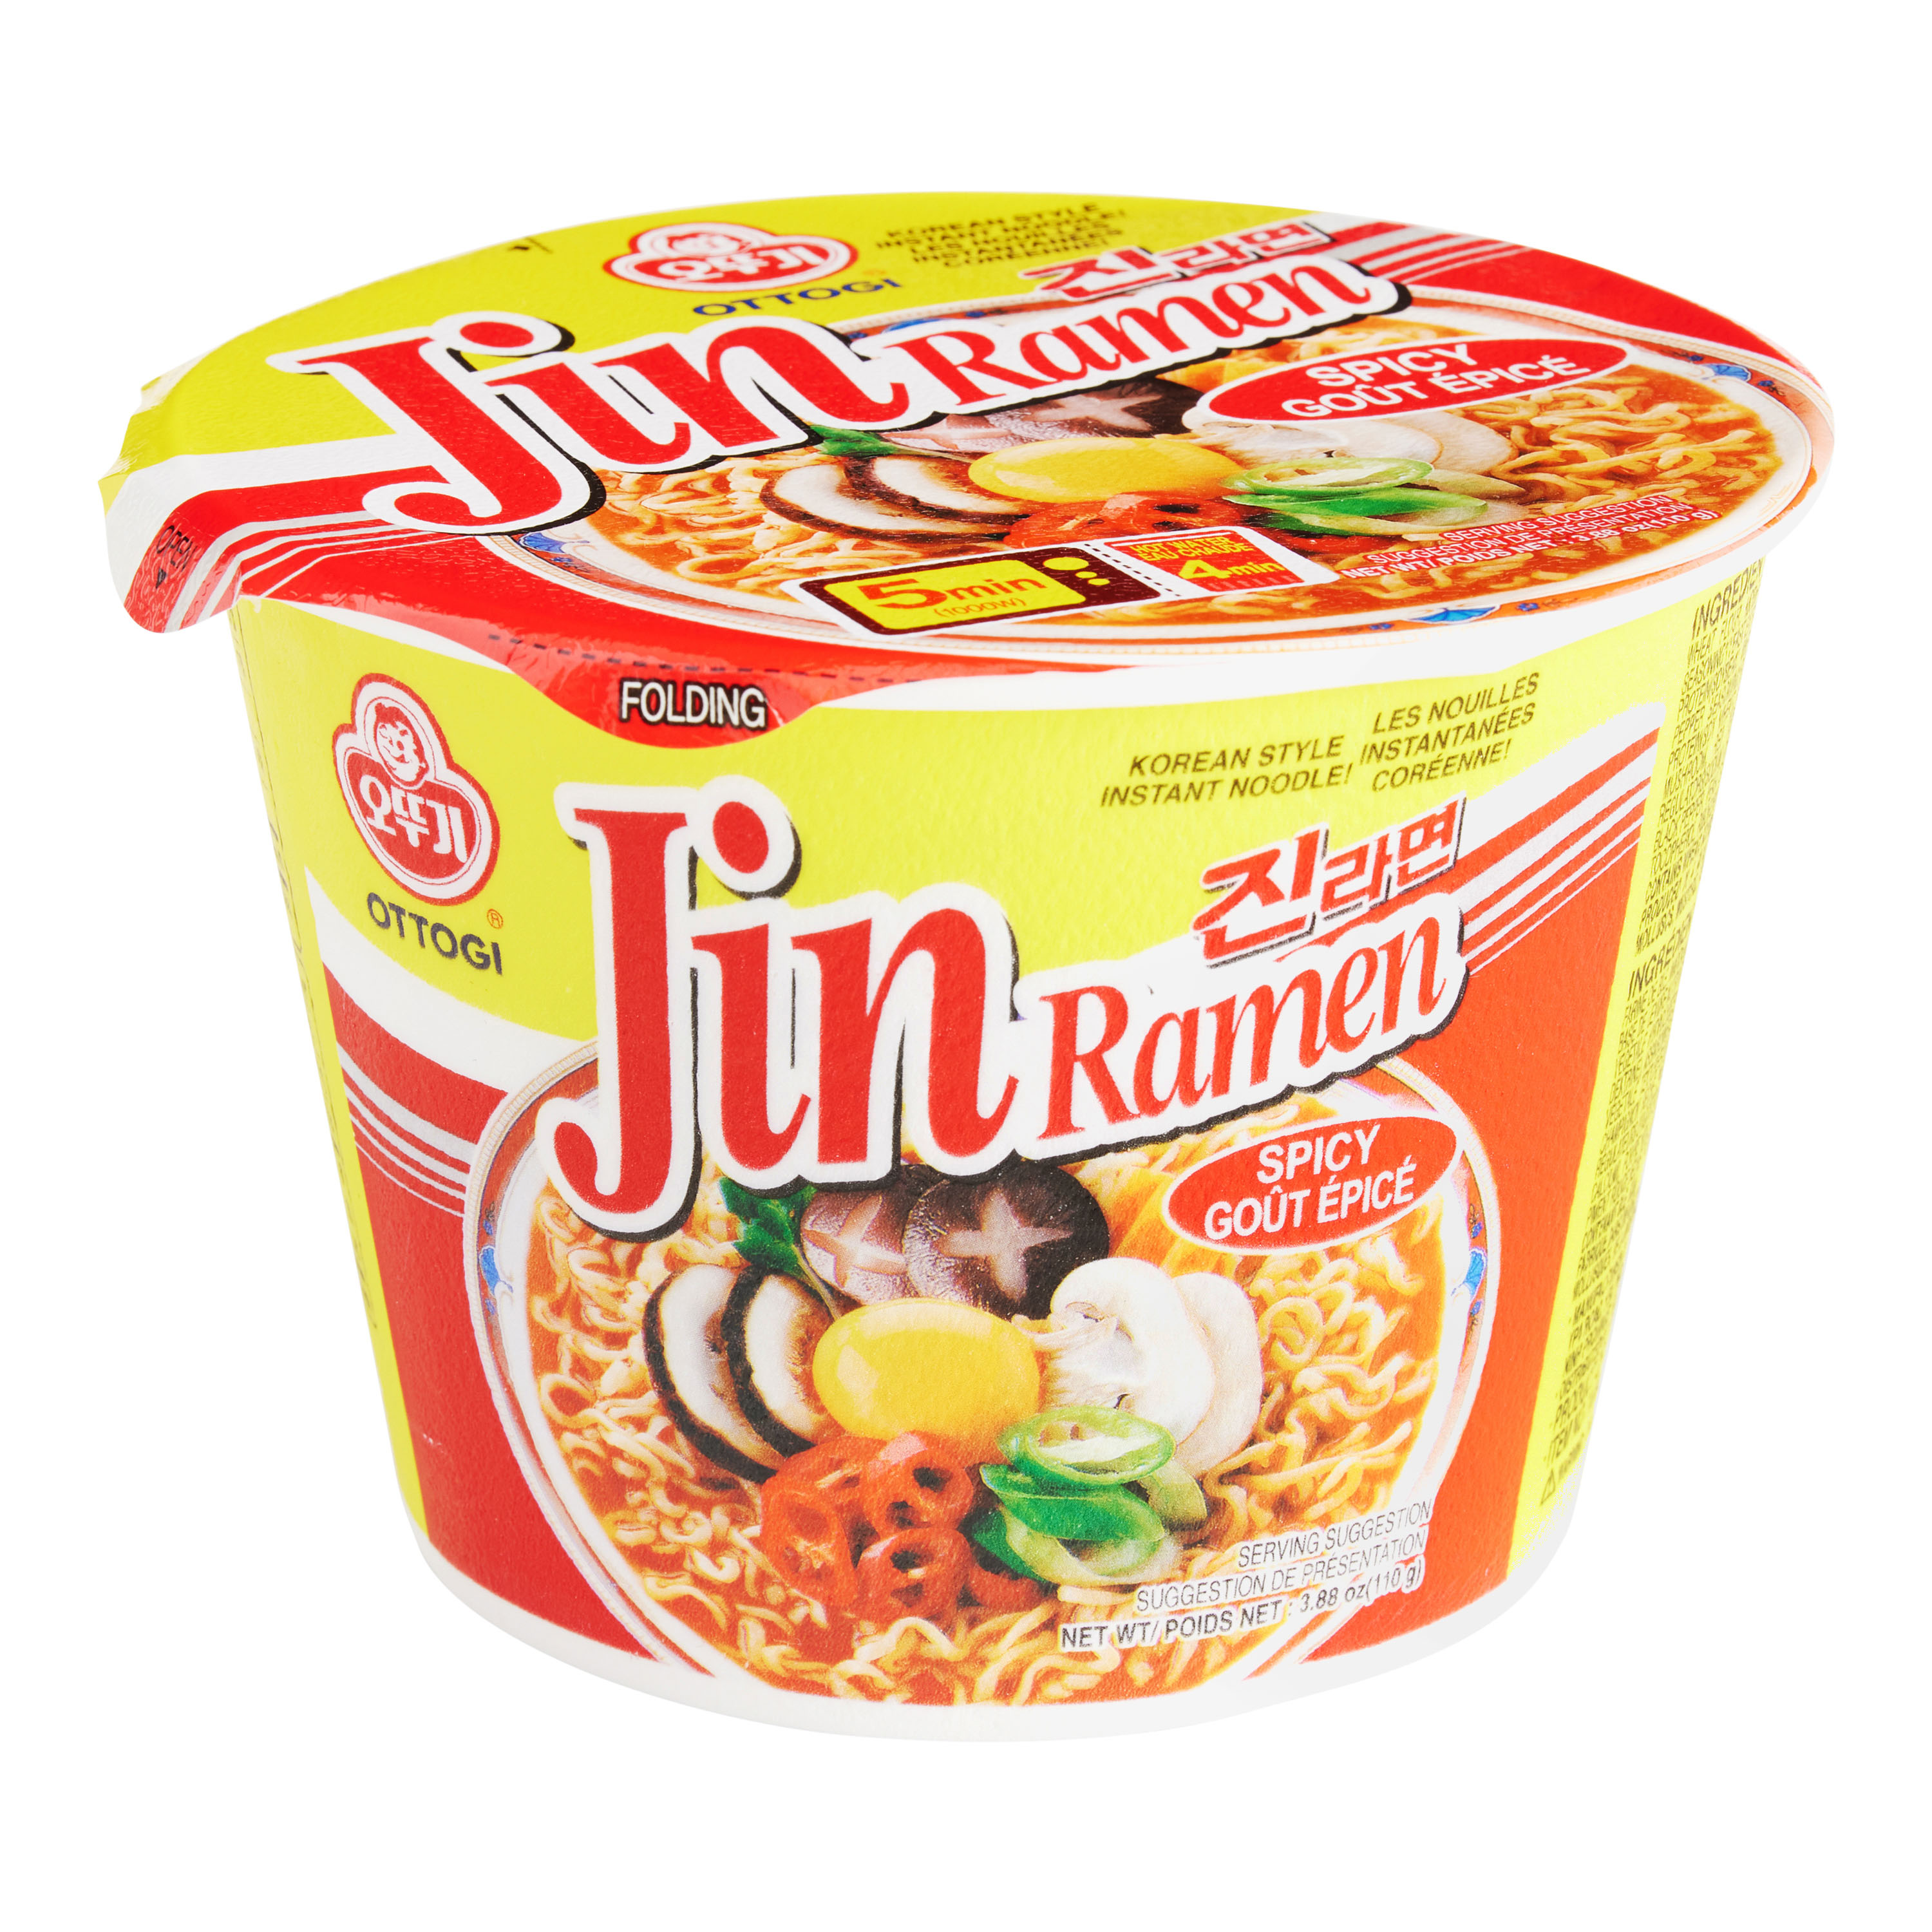 OTTOGI Jin Ramen Bowl spicy 110g